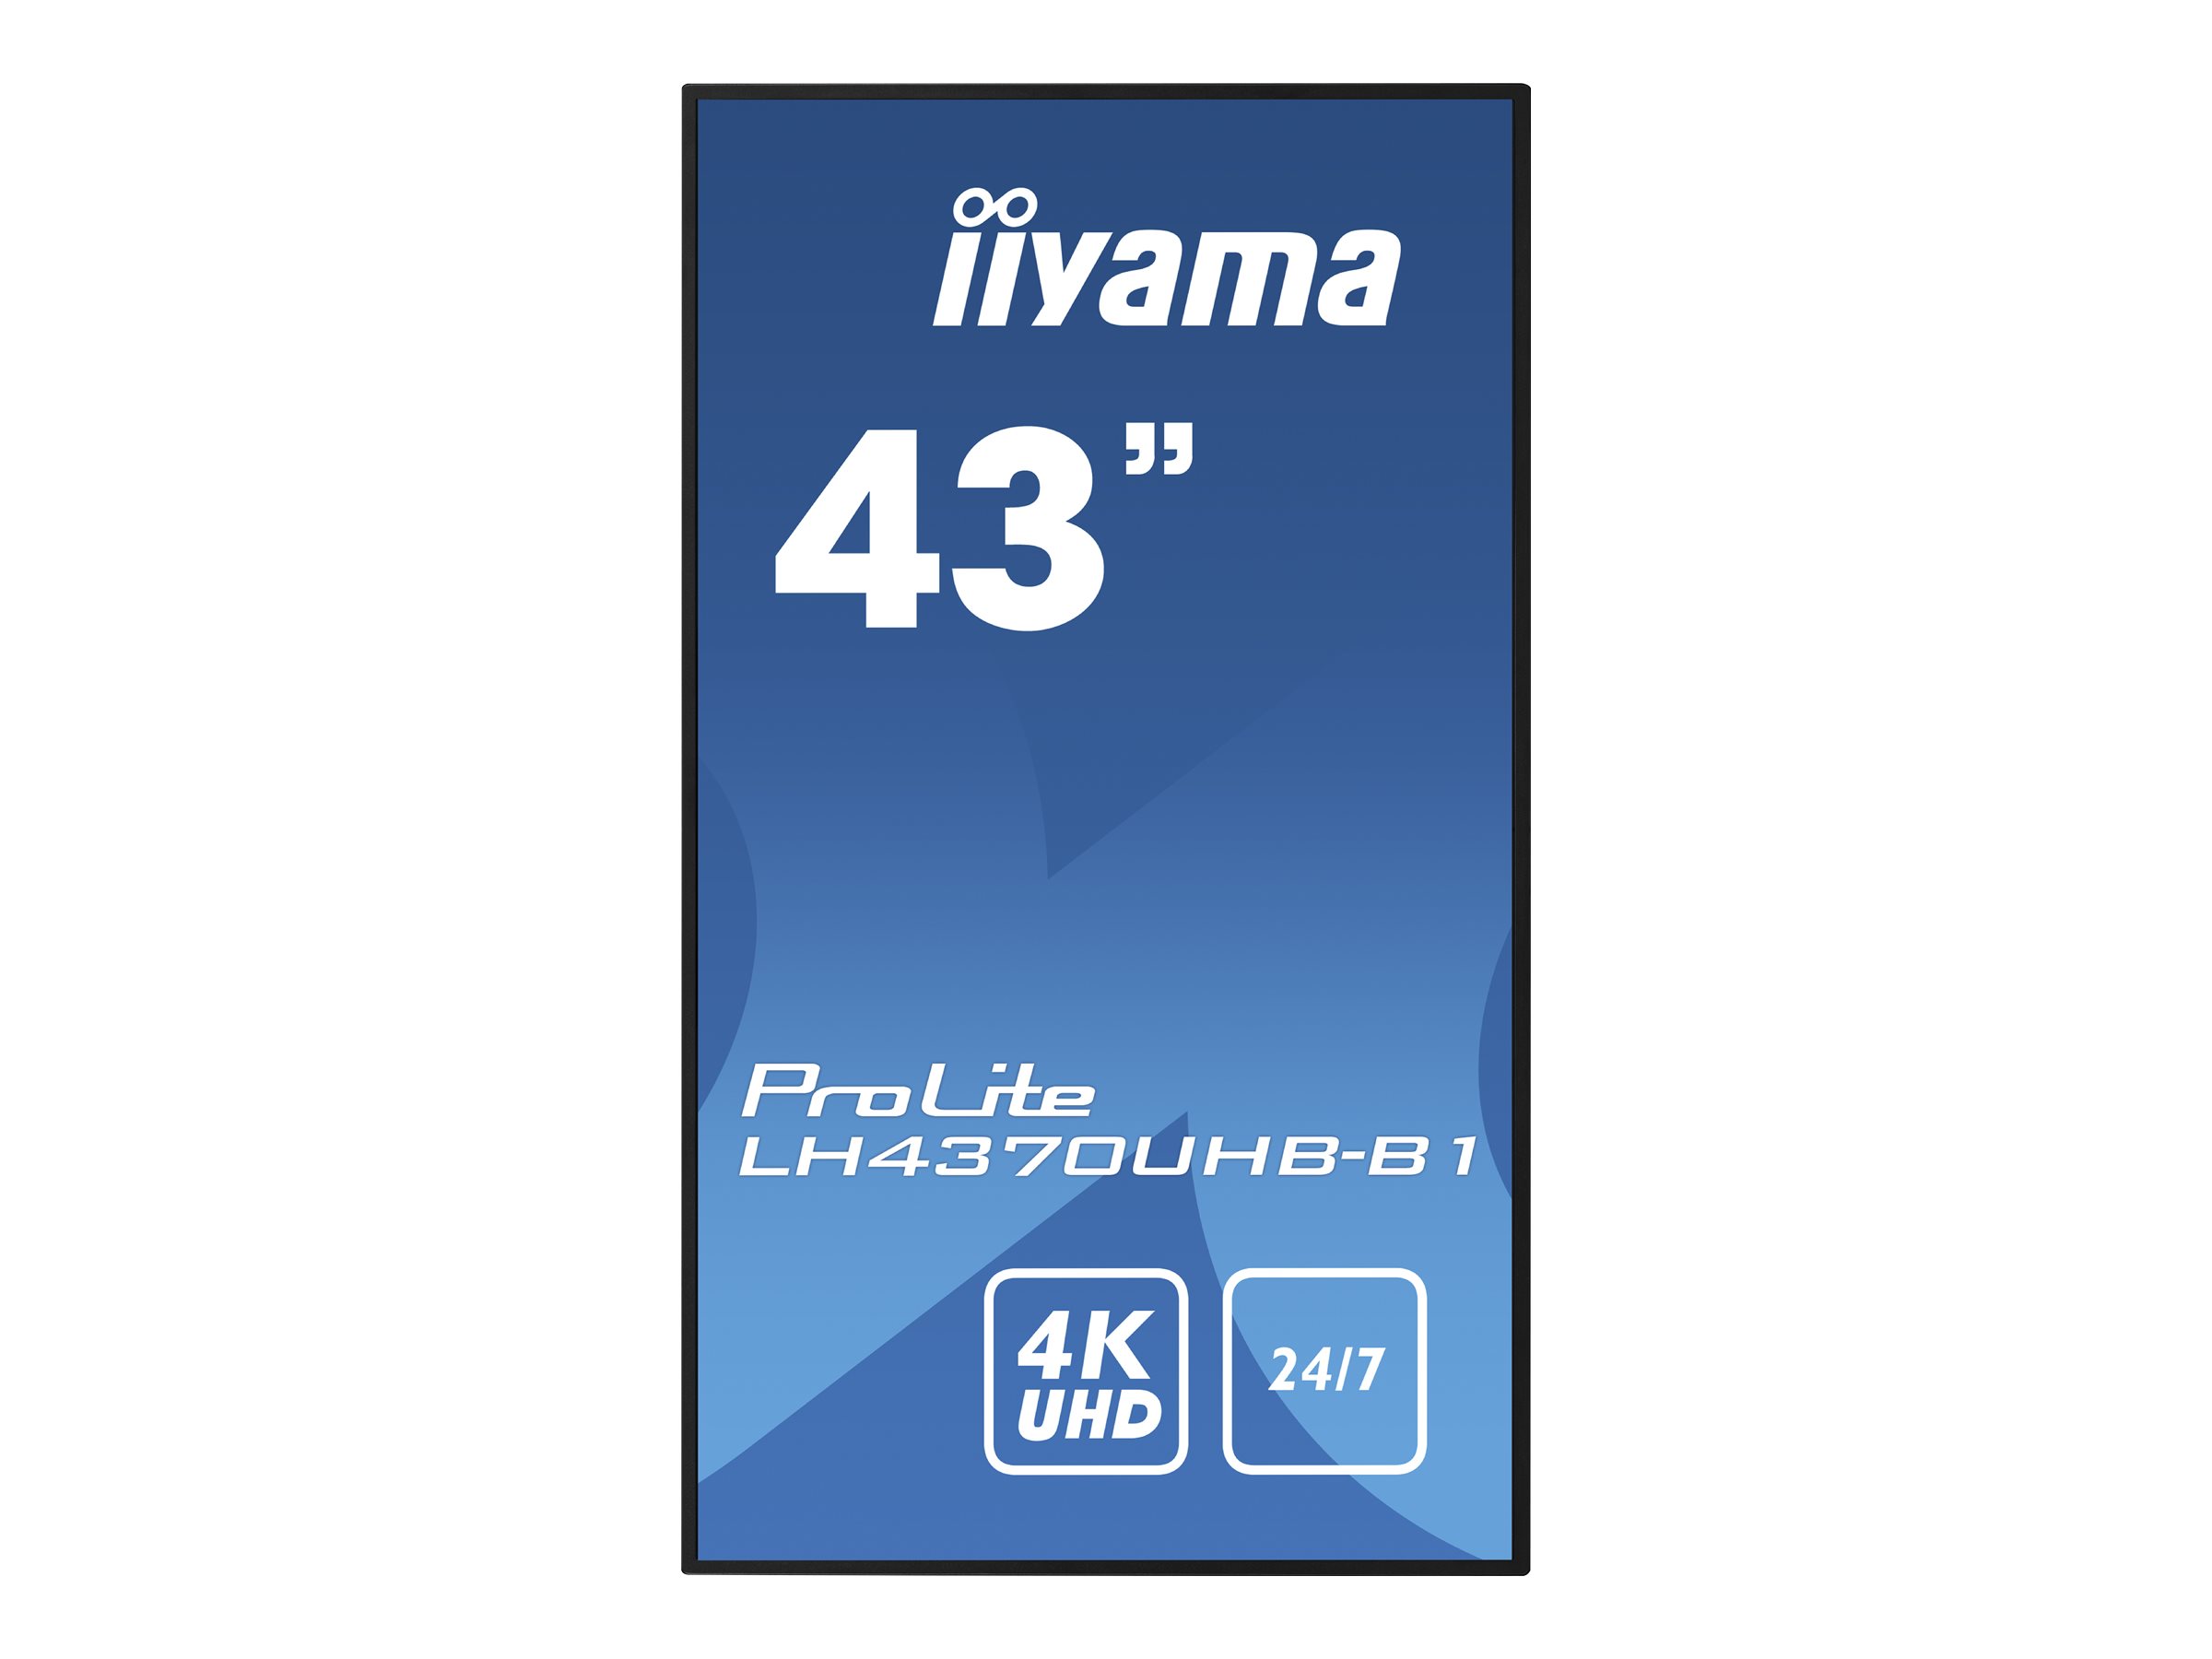 Iiyama LH4370UHB-B1 43inch VA Super Slim 4K UHD Landscape or Portrait 4000:1 700cd/m2 2xHDMI USB LAN RS232 Android 9 OS